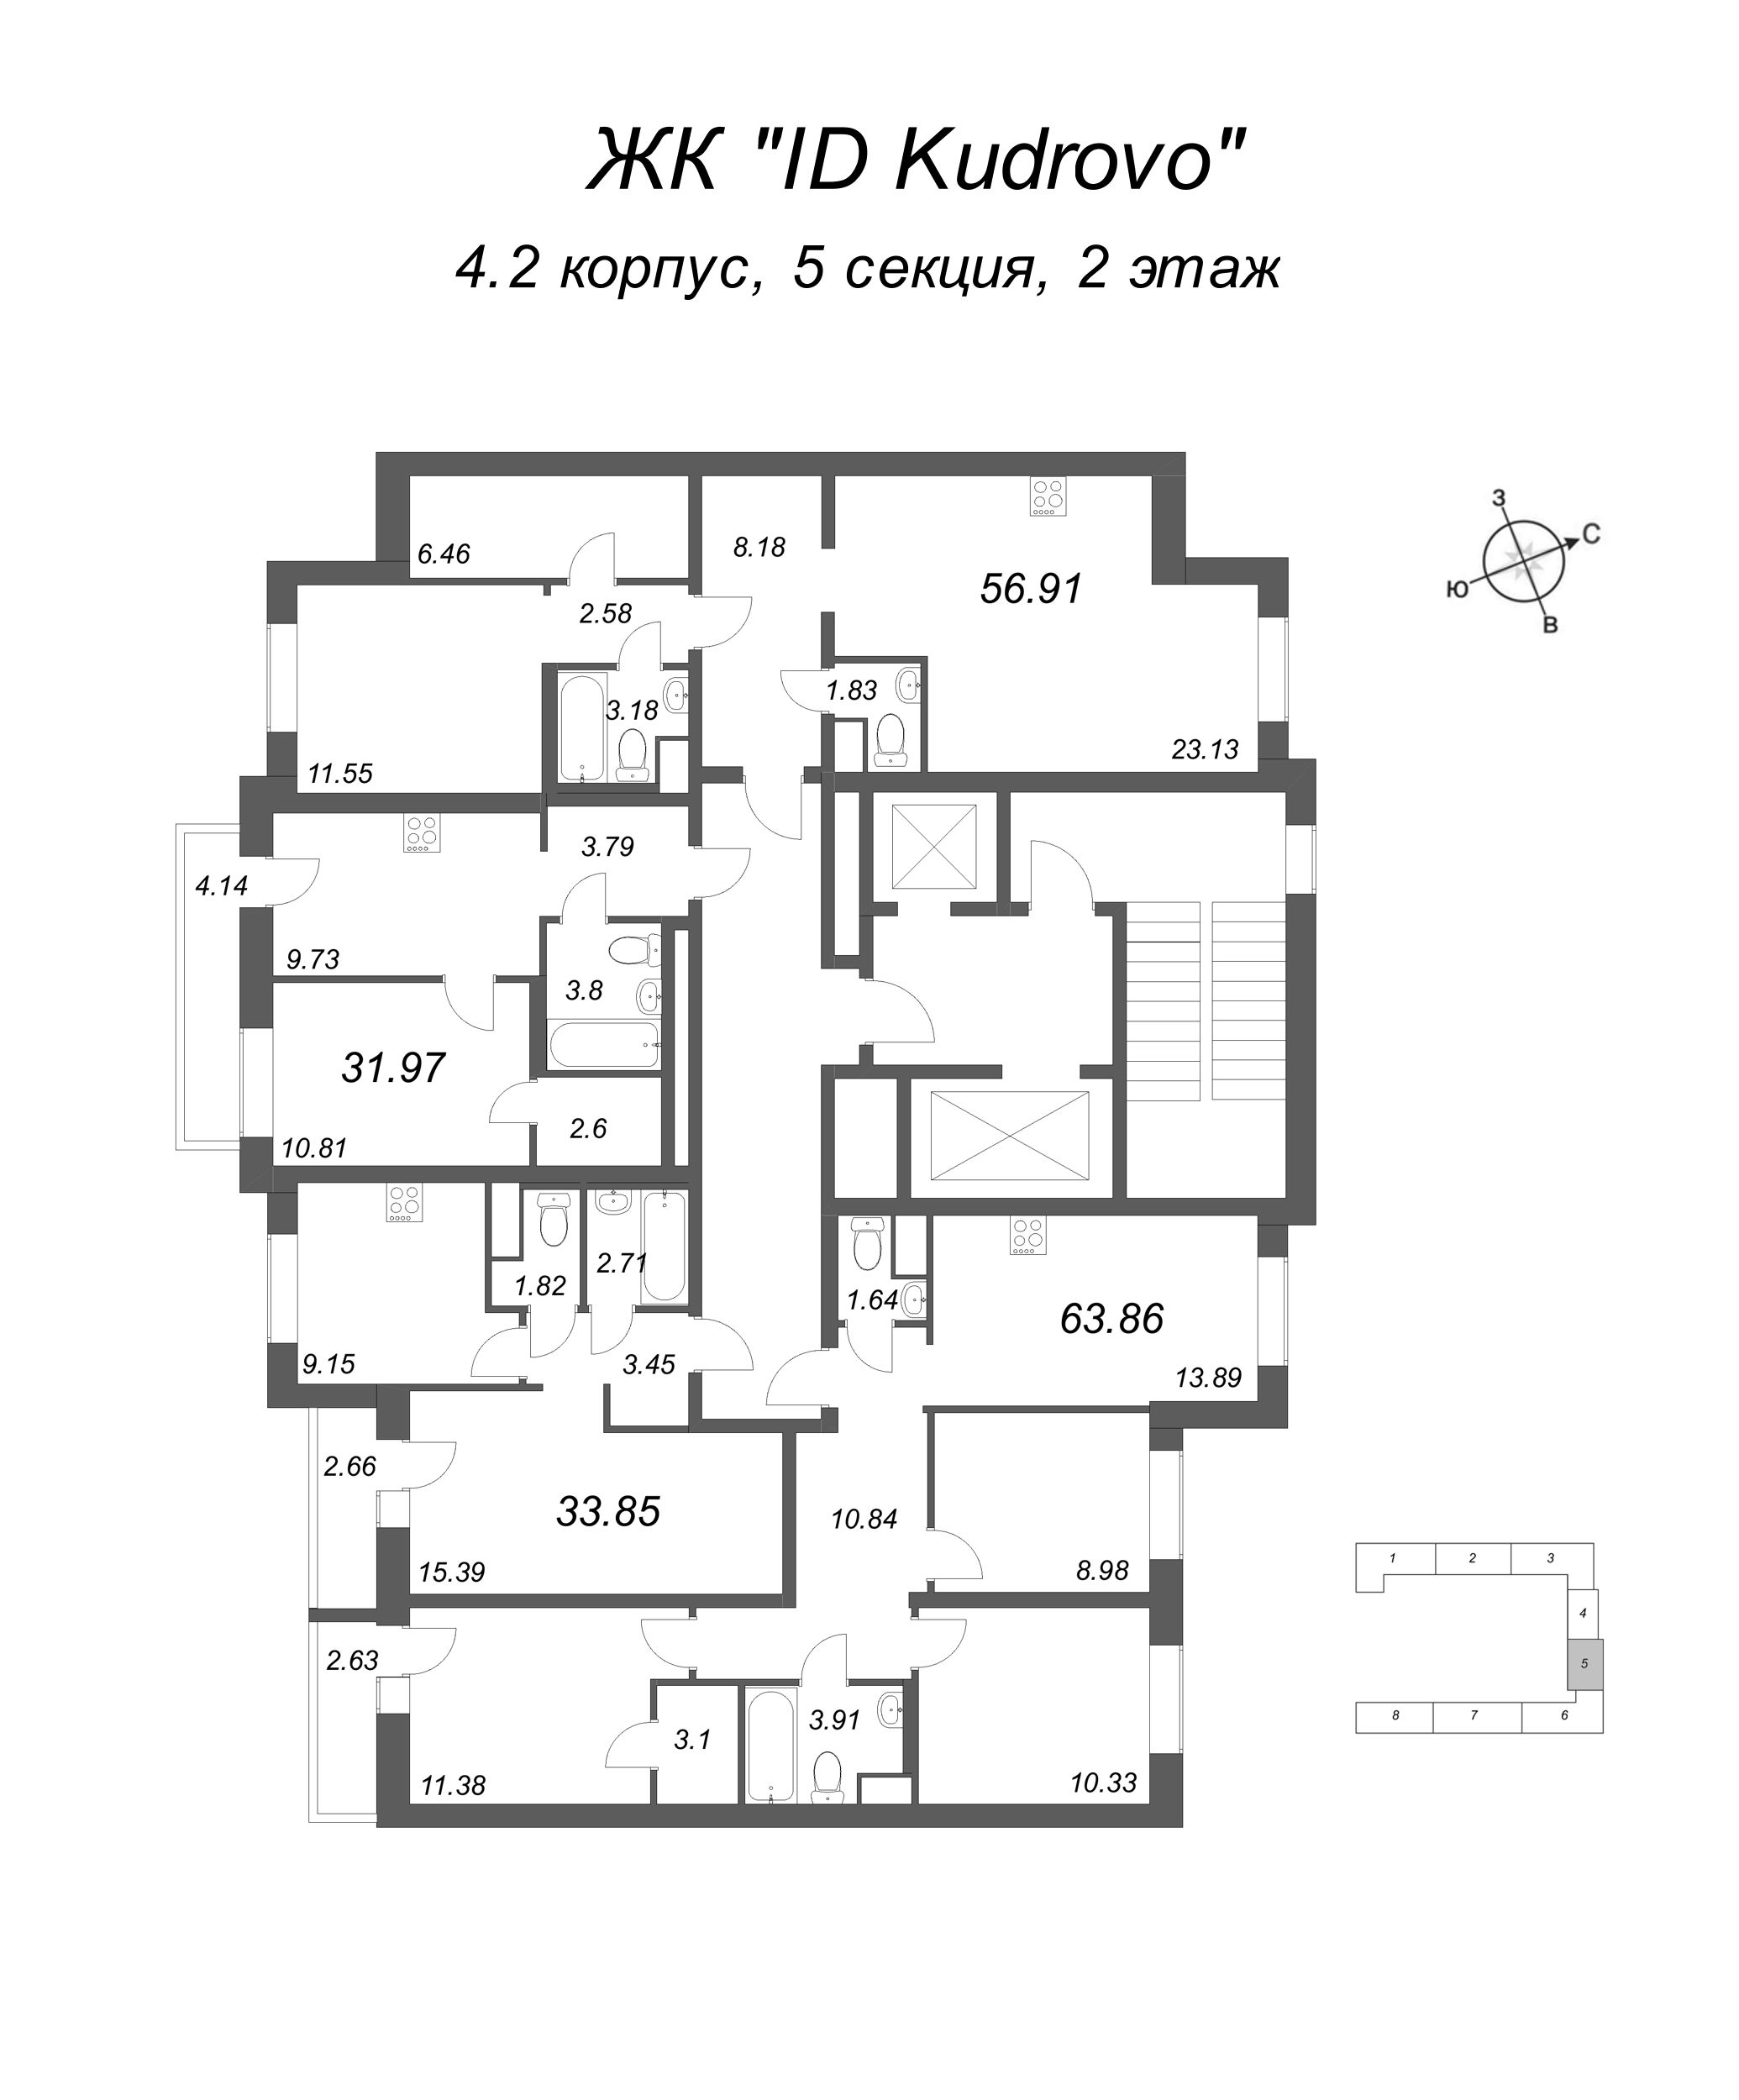 2-комнатная (Евро) квартира, 56.91 м² - планировка этажа